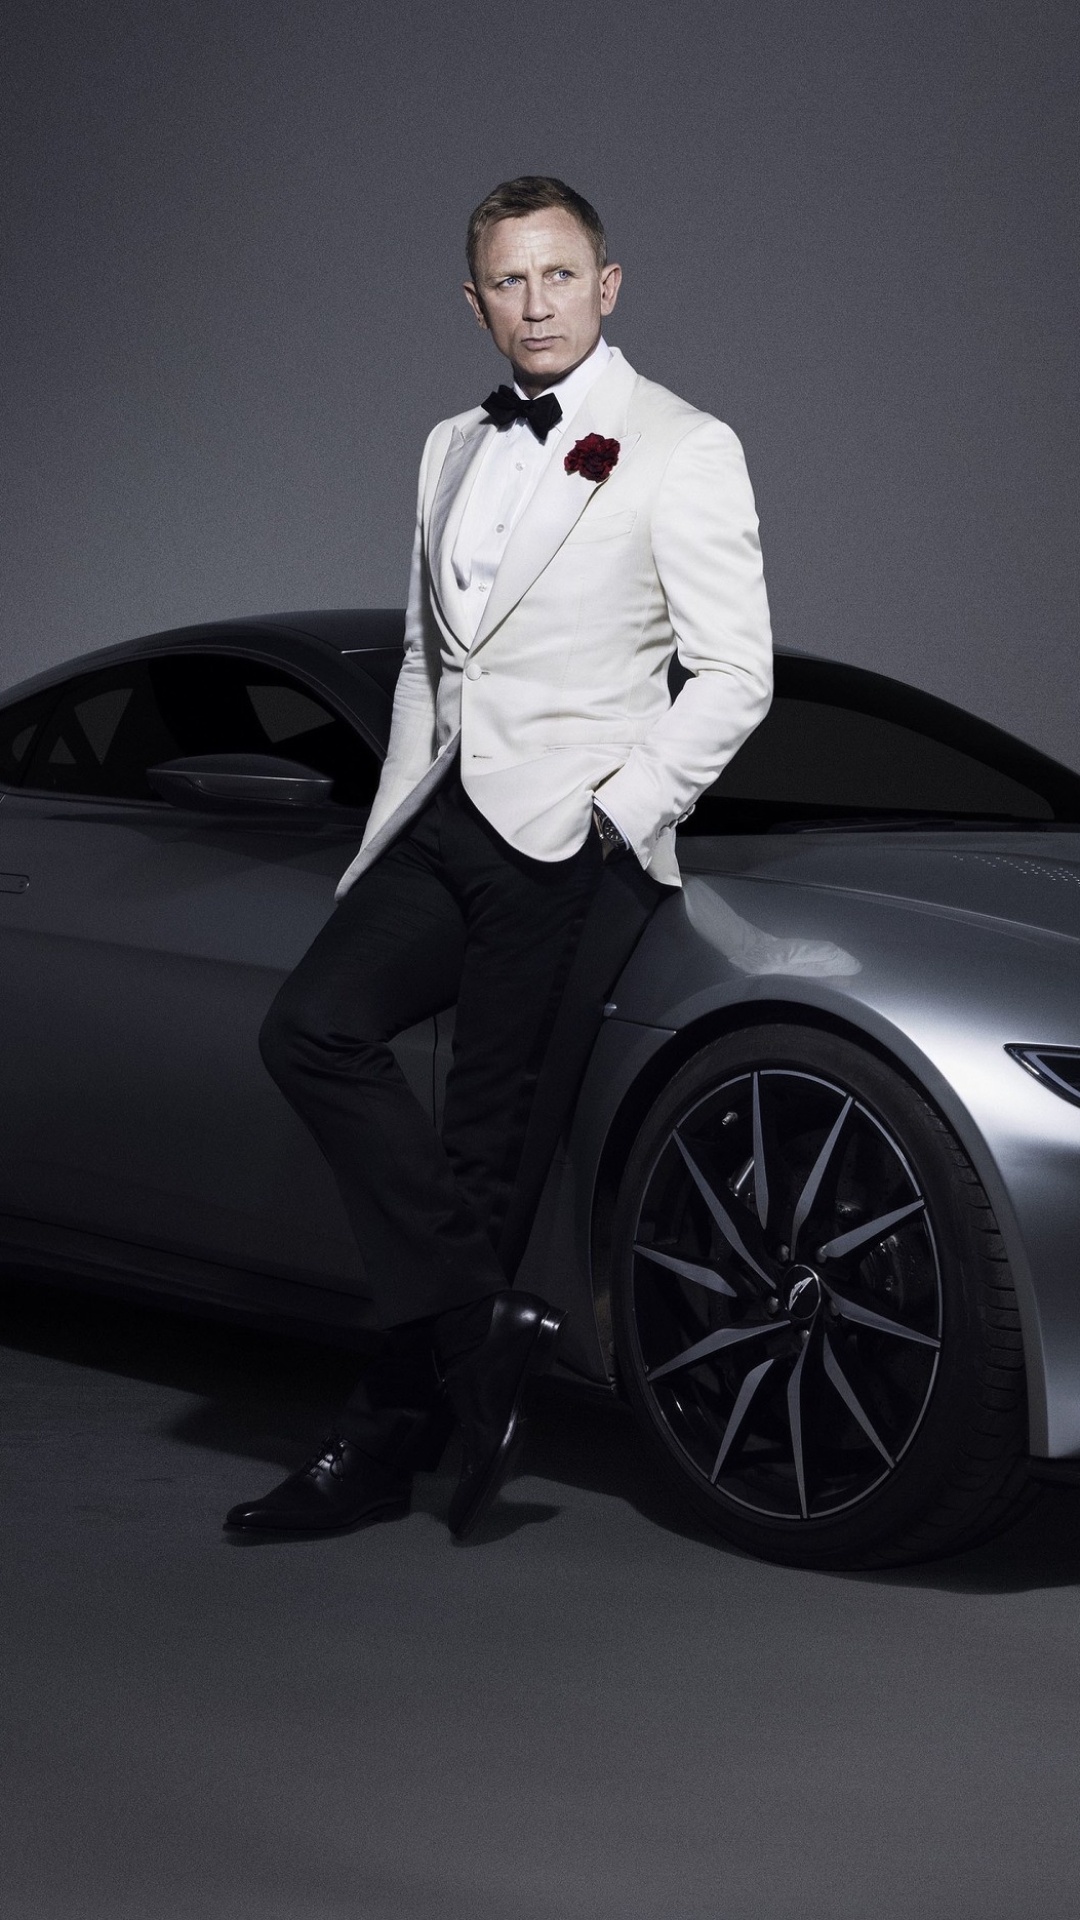 Daniel Craig: Celebrity, Named one of the “15 Sexiest Men” by Elle Magazine in June 2007. 1080x1920 Full HD Wallpaper.